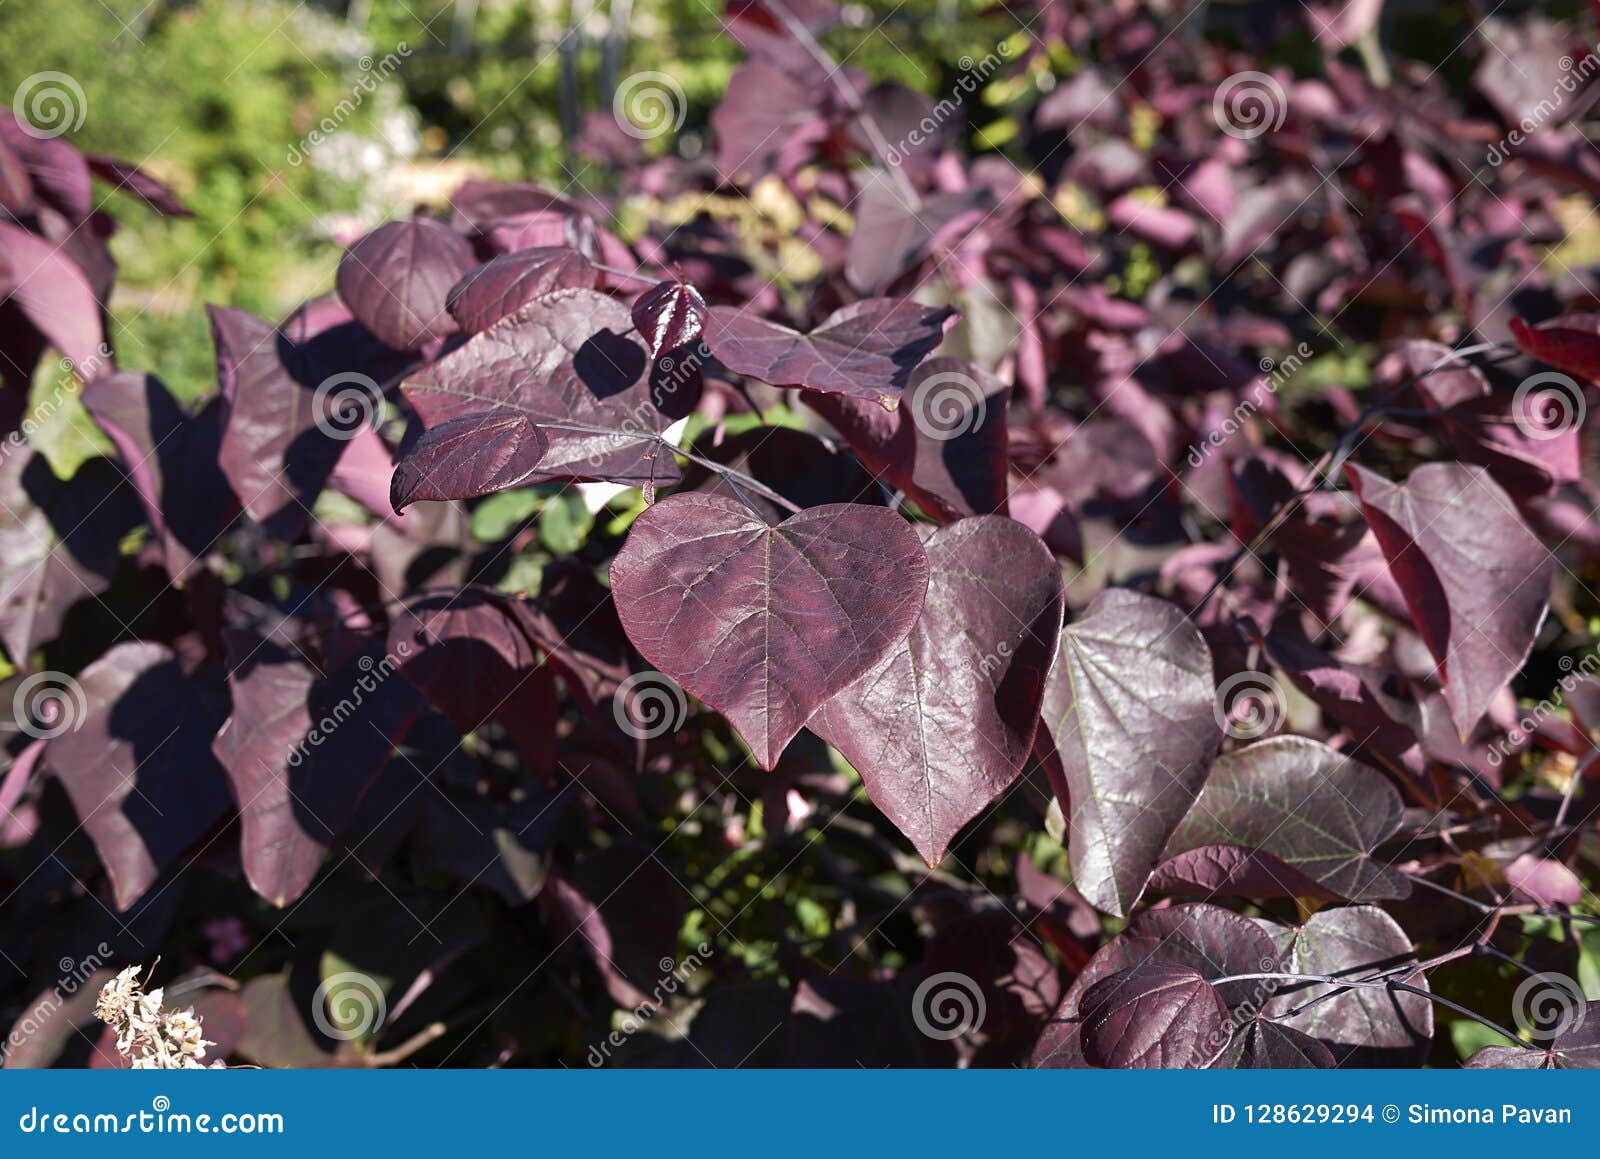 purple leaves of cercis canadensis tree